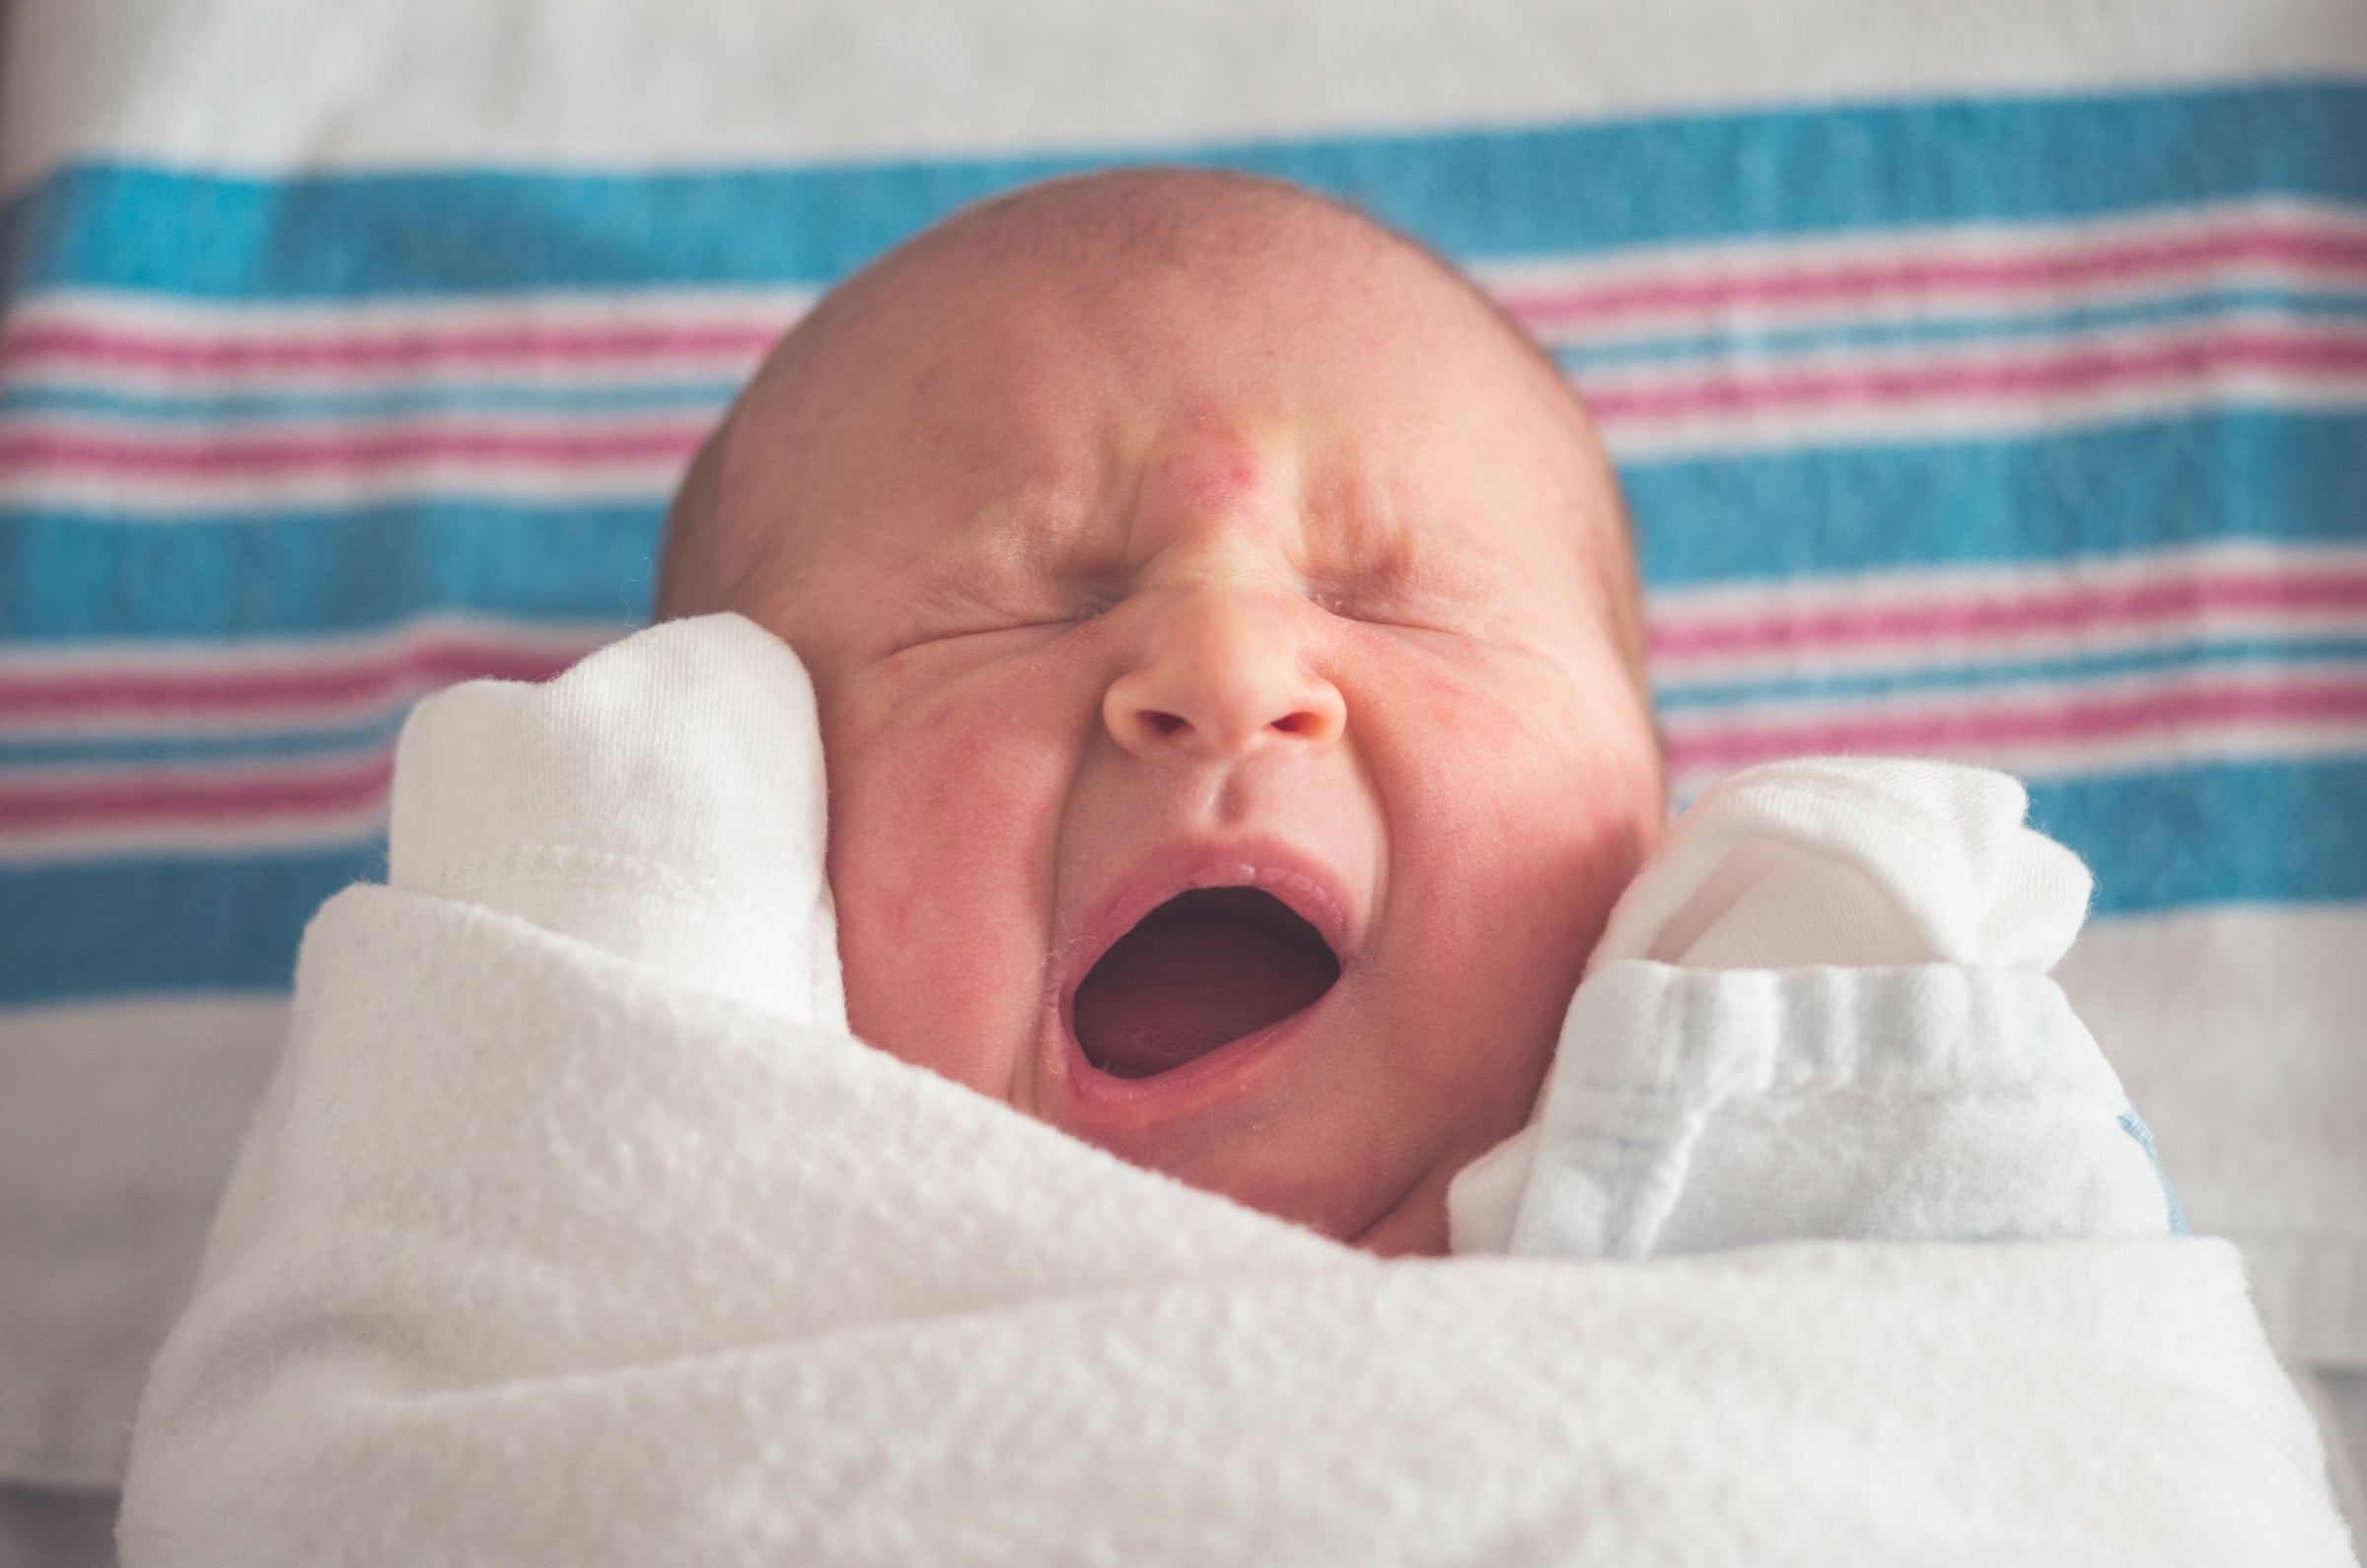 Newborn baby yawns in his crib